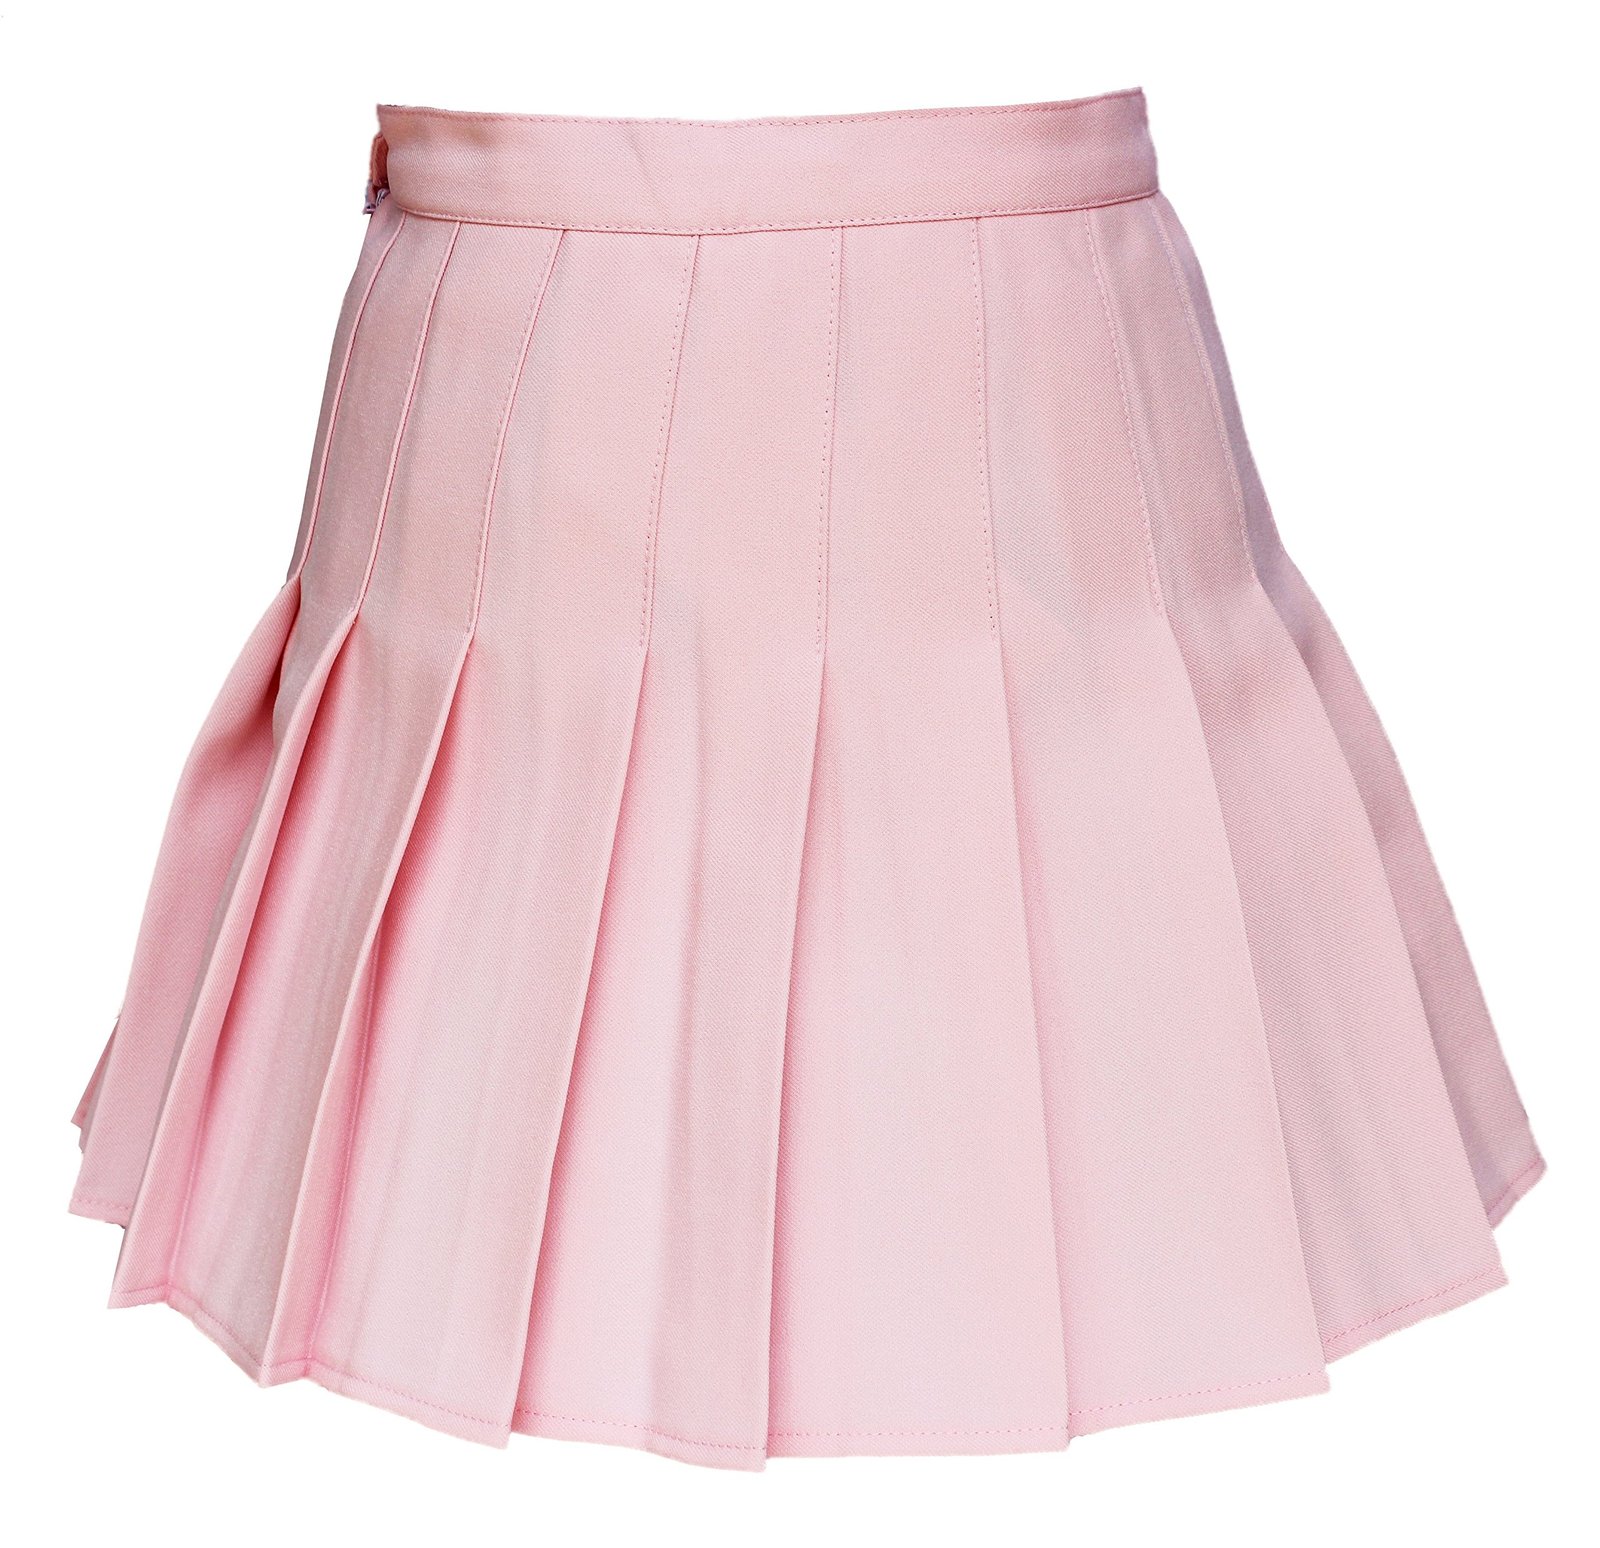 Beautifulfashionlife Women's High Waist Solid Pleated Tennis Skirt (XL, Pink)